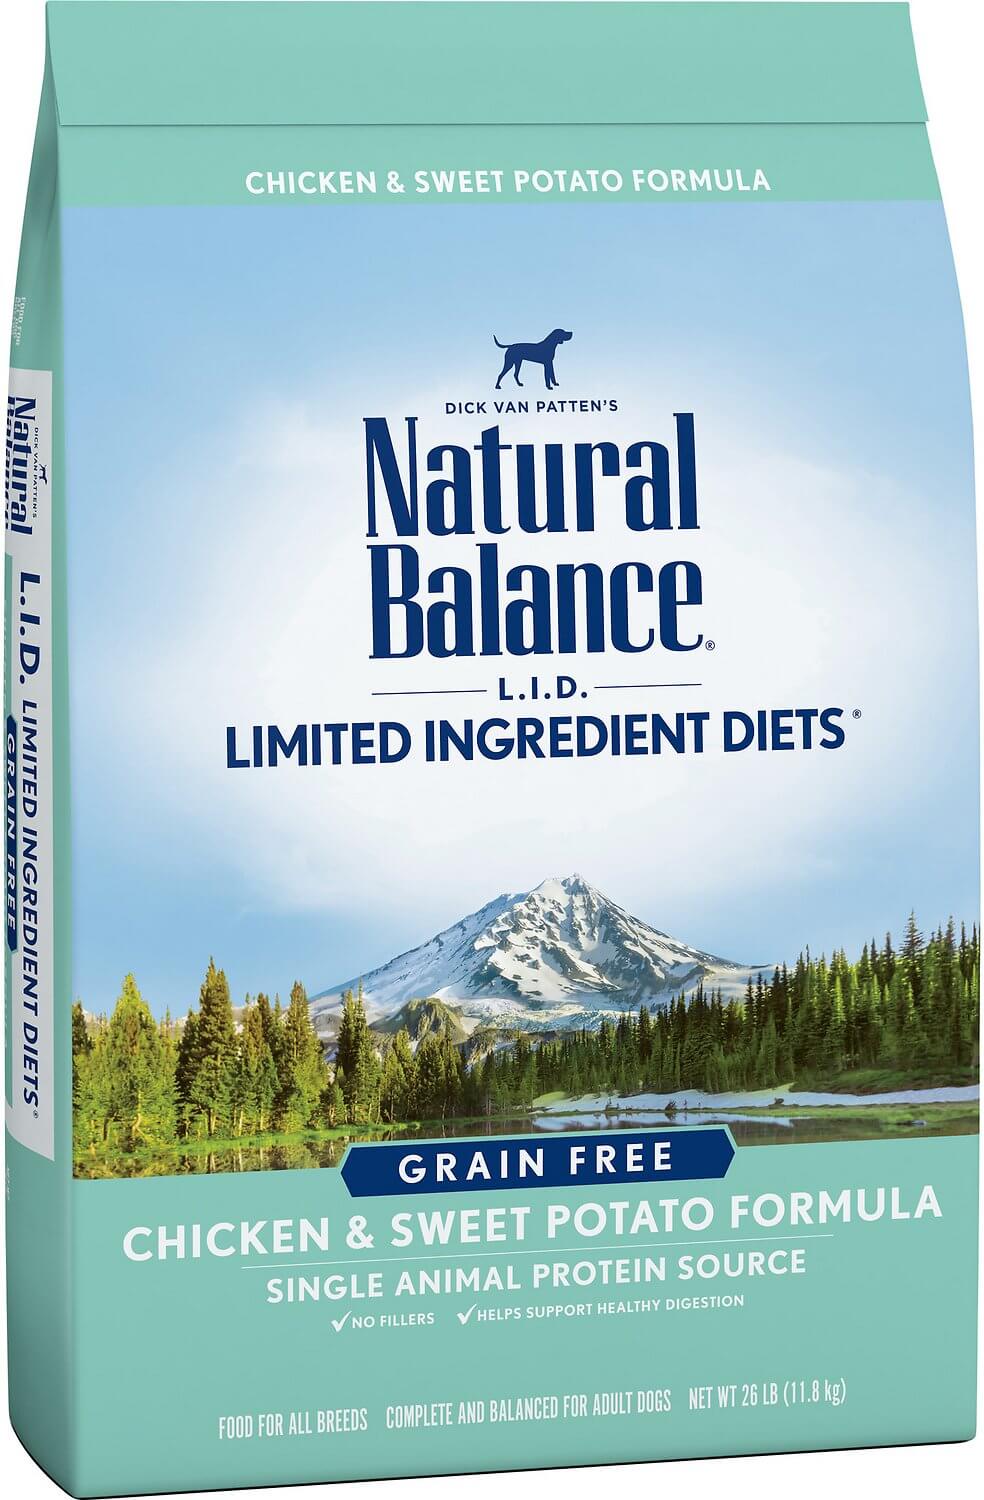 natural balance vegetarian canned dog food